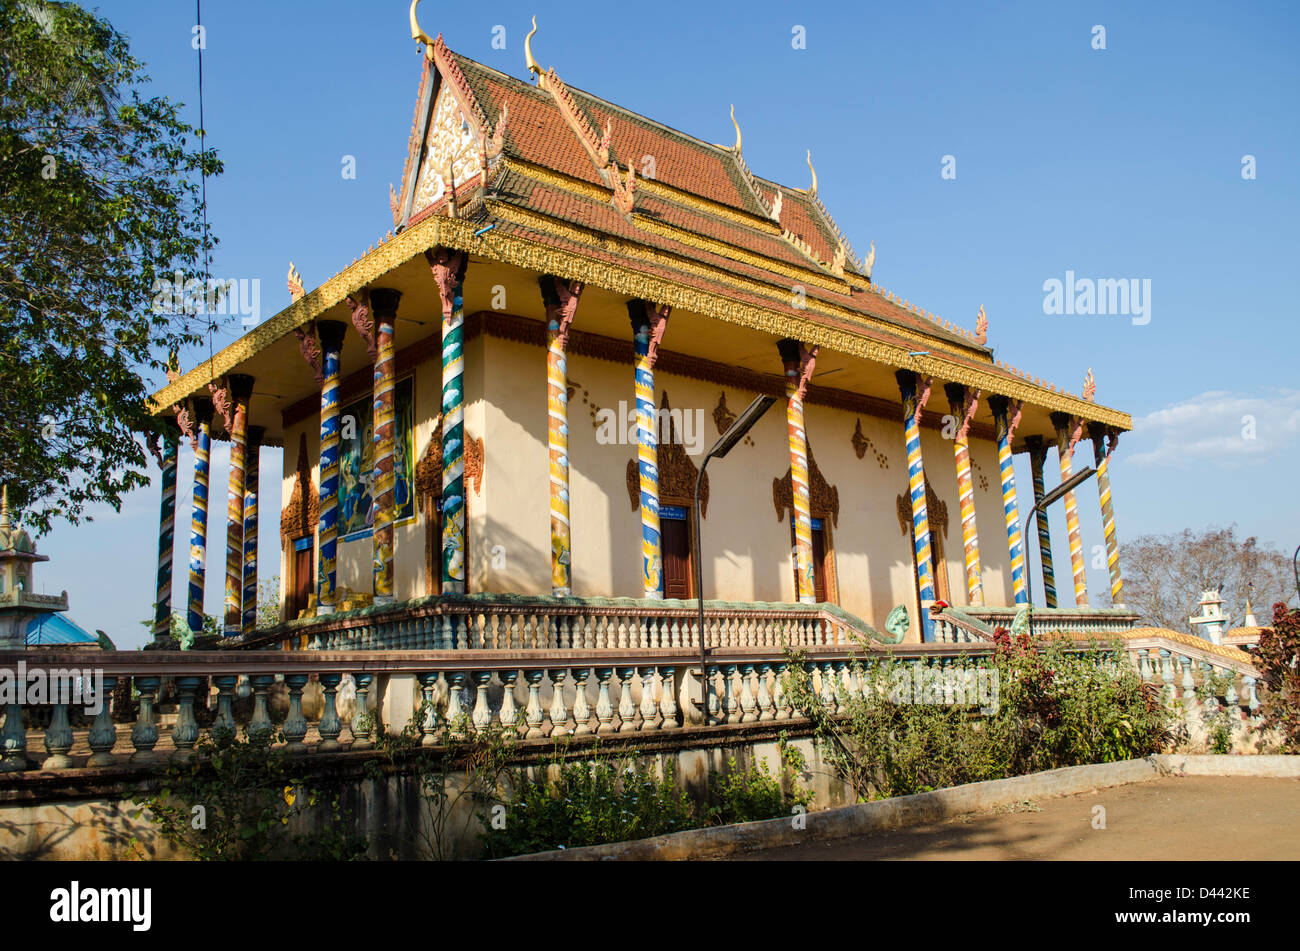 Ratanakiri Banlung Ban Lung Cambodia temple stuppa pagoda Stock Photo